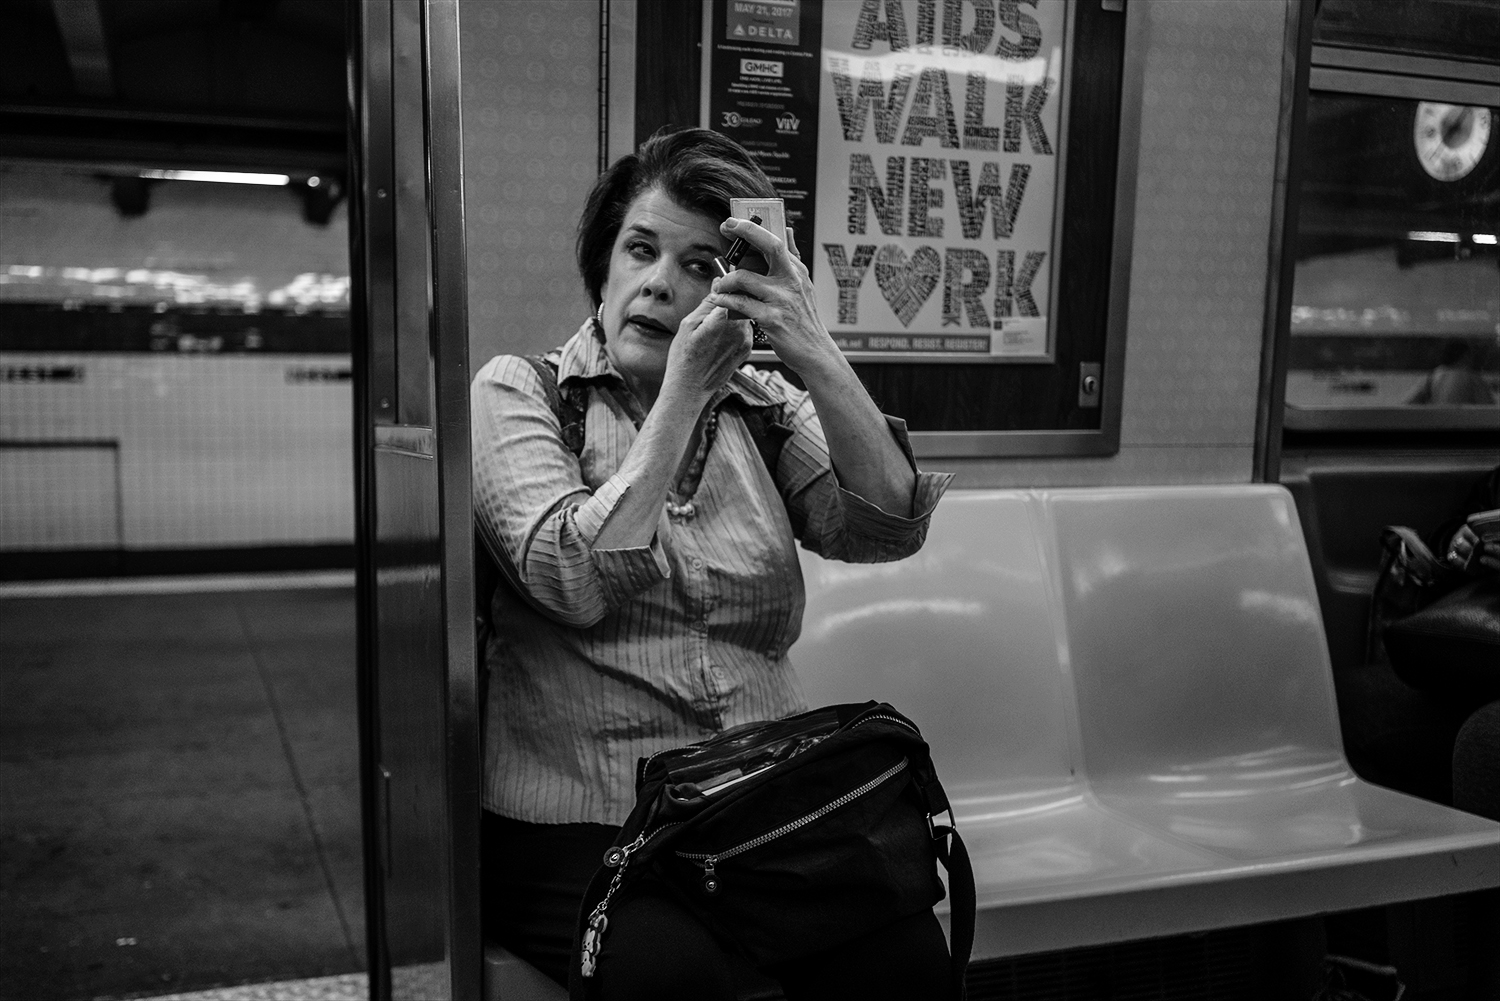 Brklyn_Subway_2018_Make_Up_Lady-007.jpg